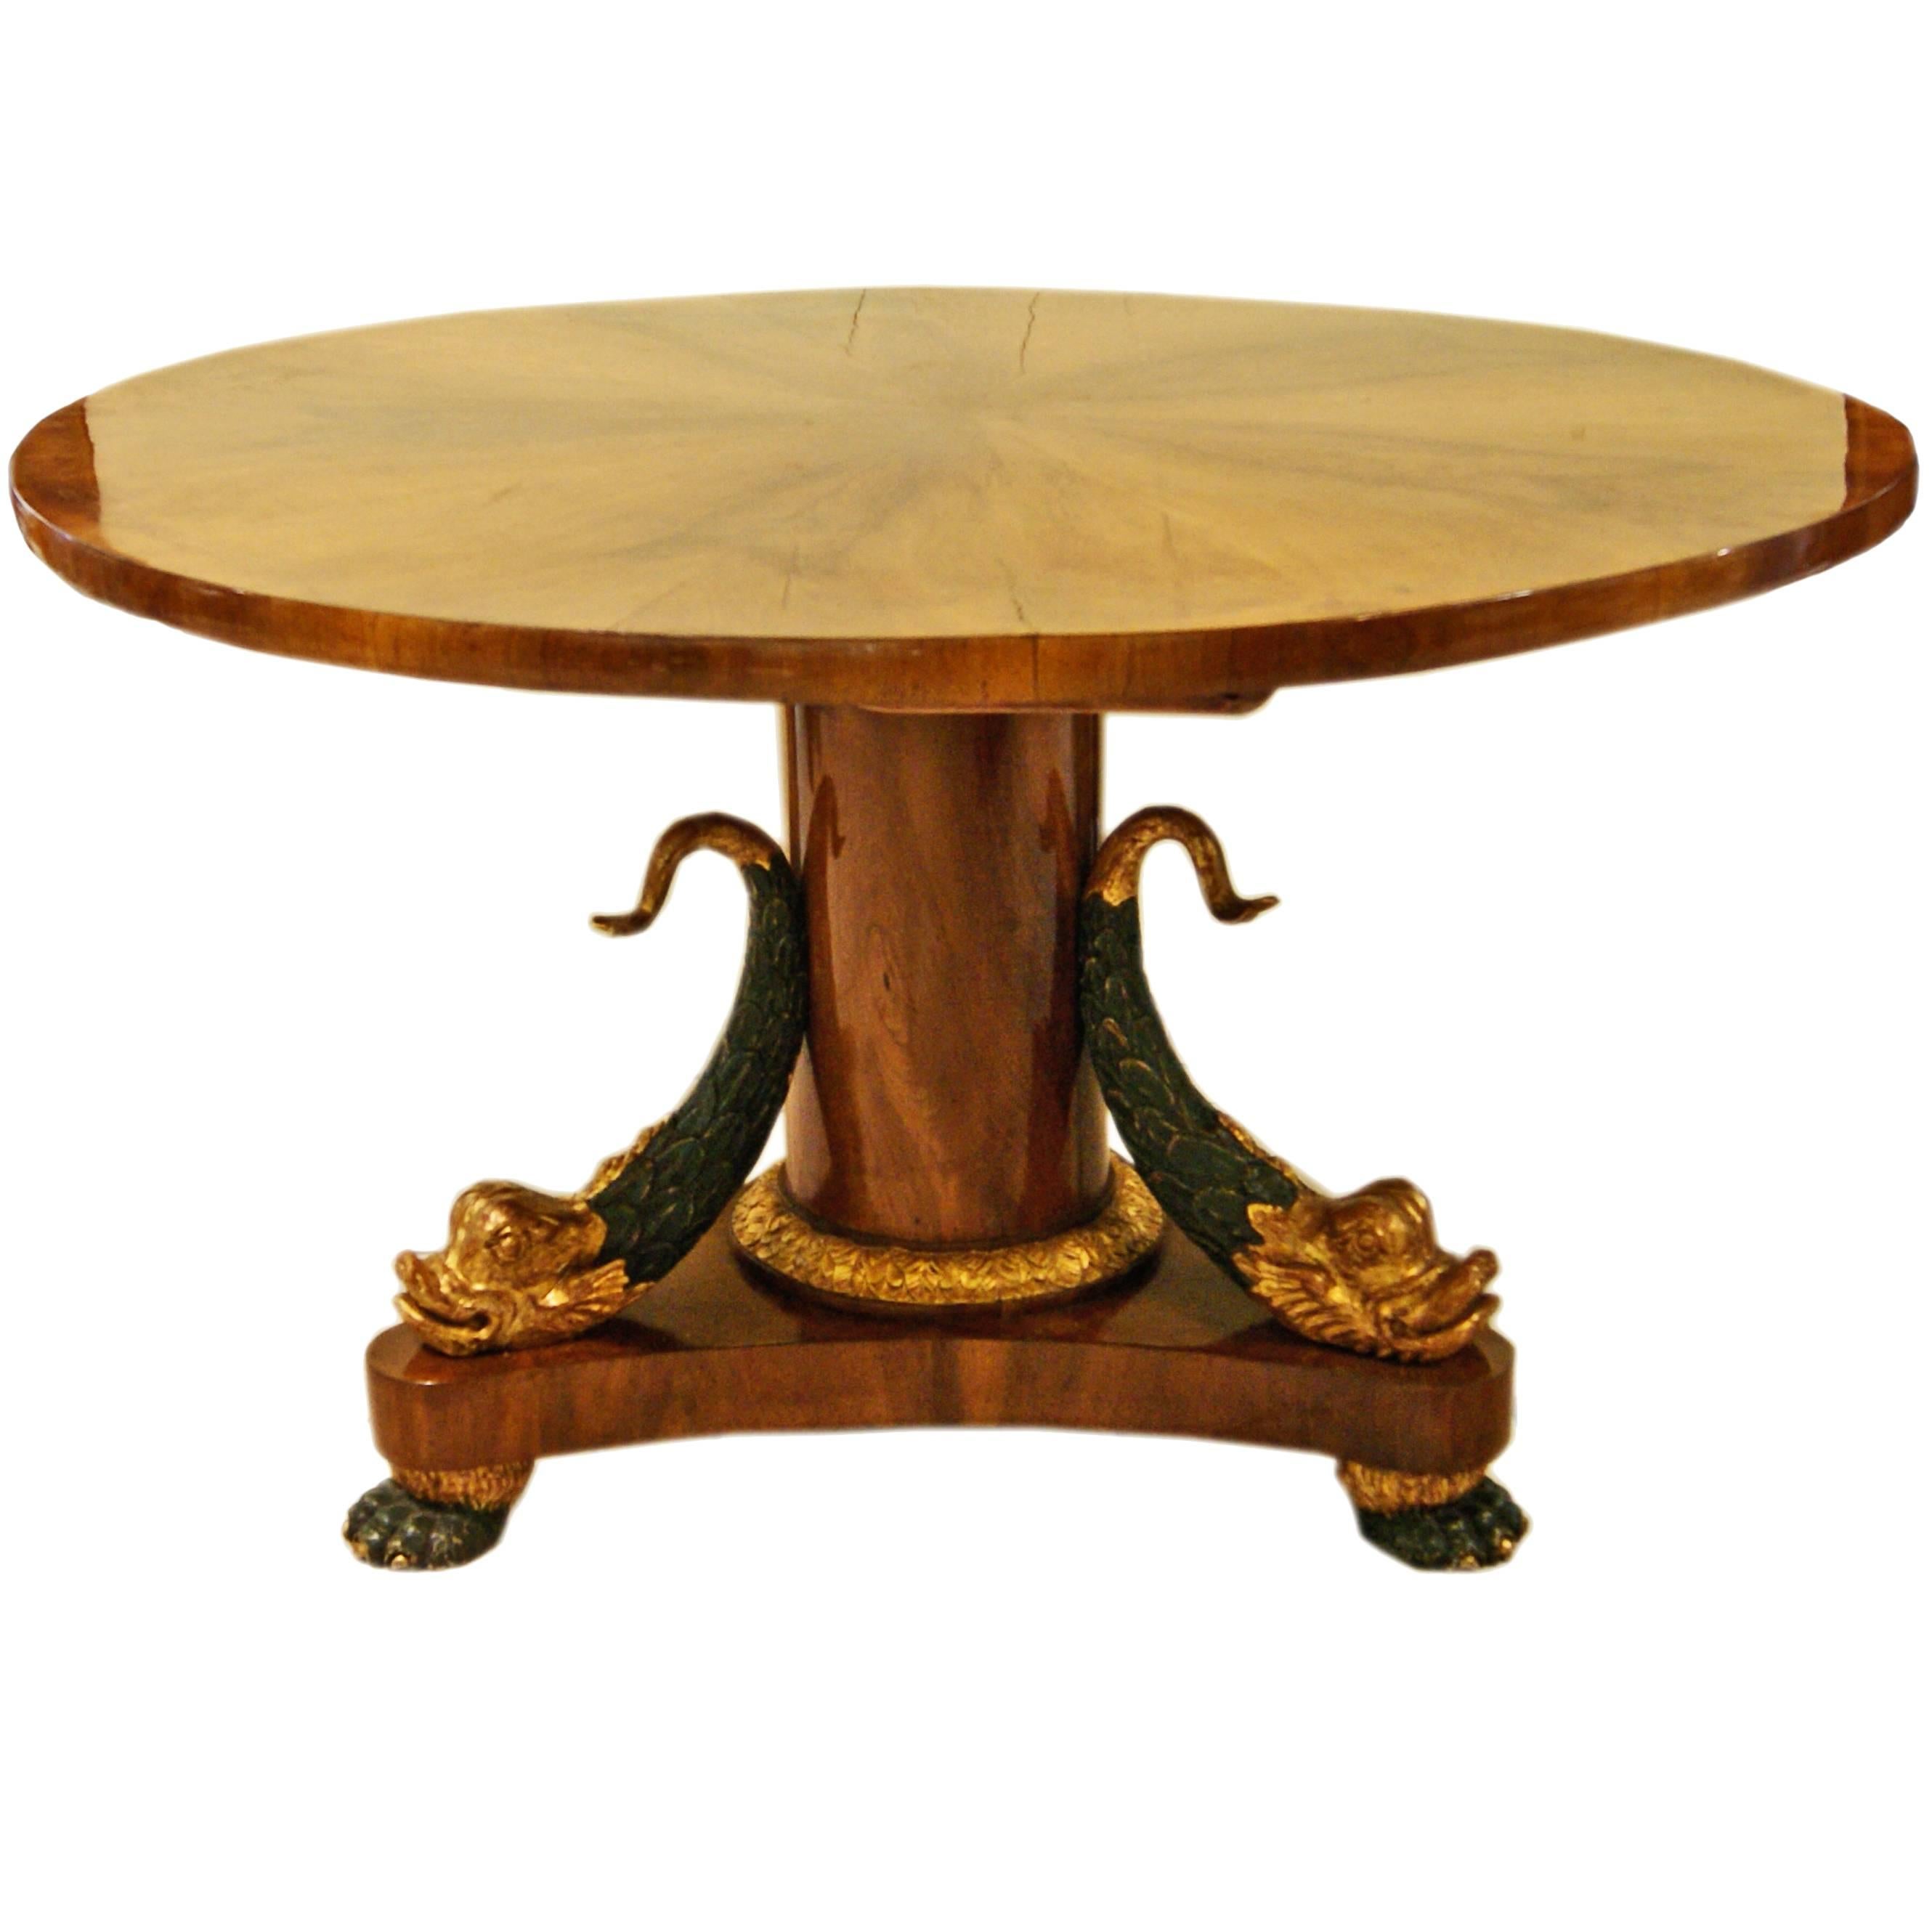 Empire Biedermeier Table for Parlor with Dolphins Vienna Nut Wood Veneer c.1815